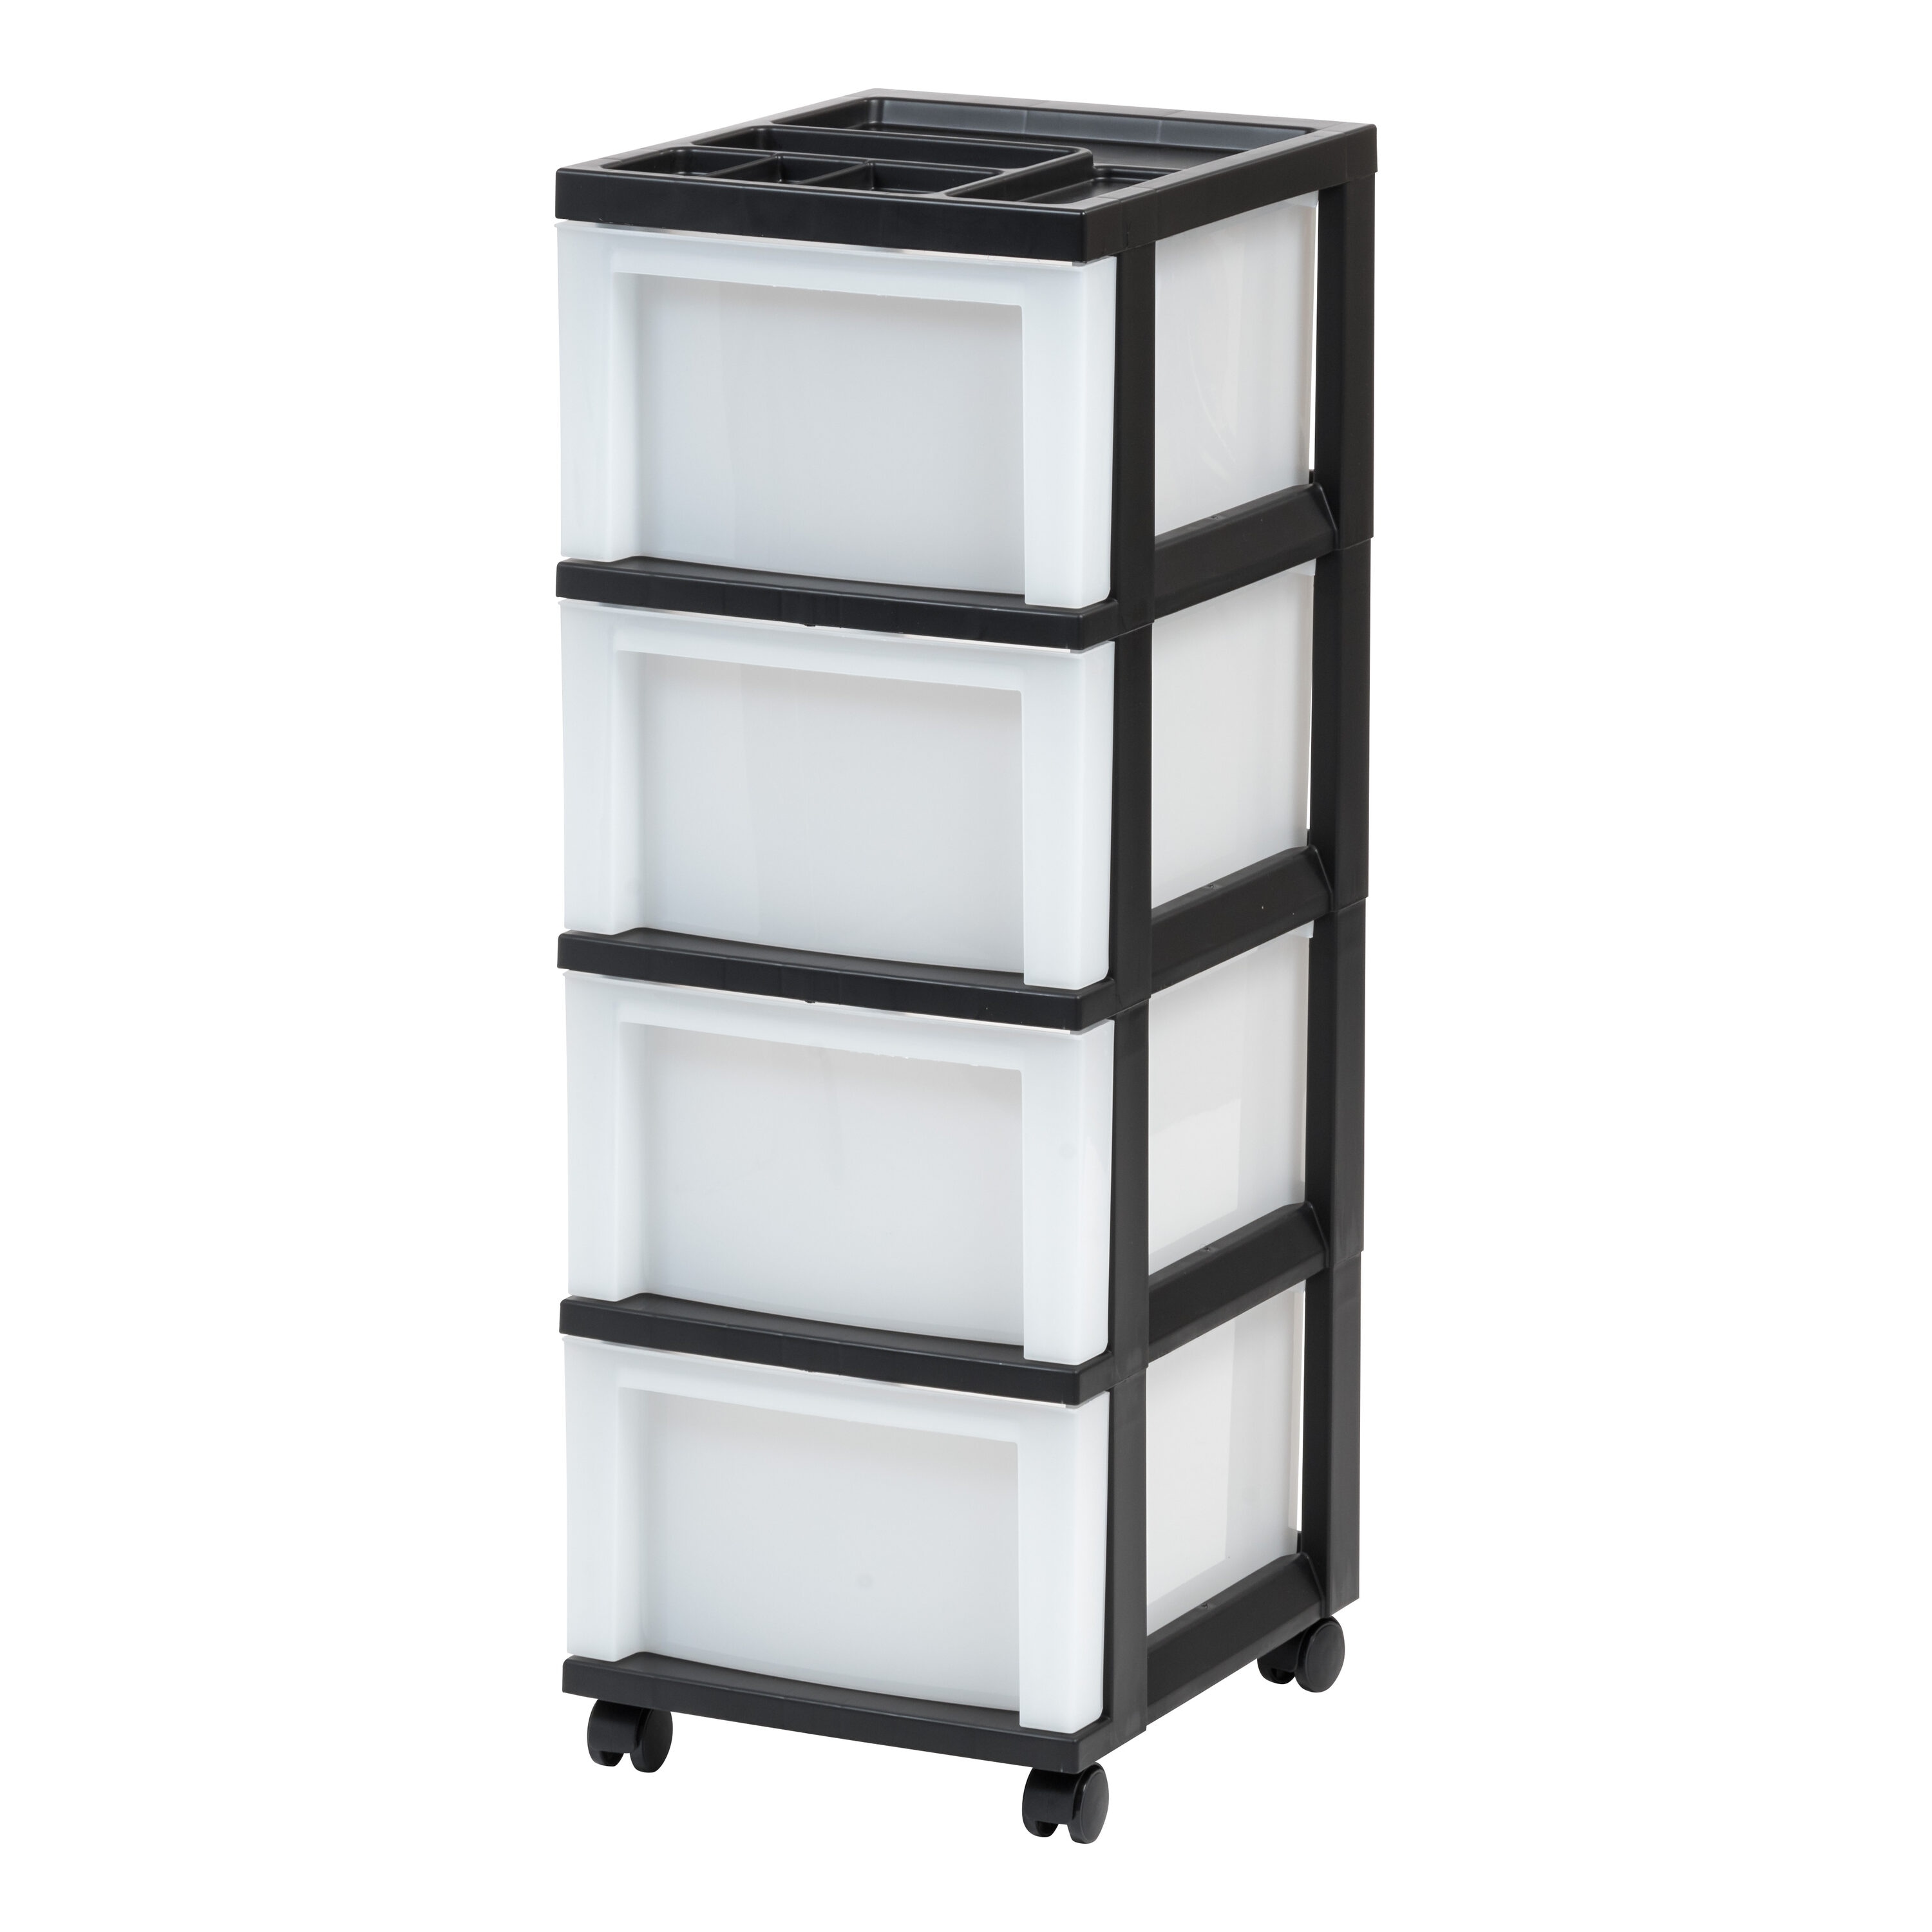 Bin Storage Cabinet With 4 Drawers